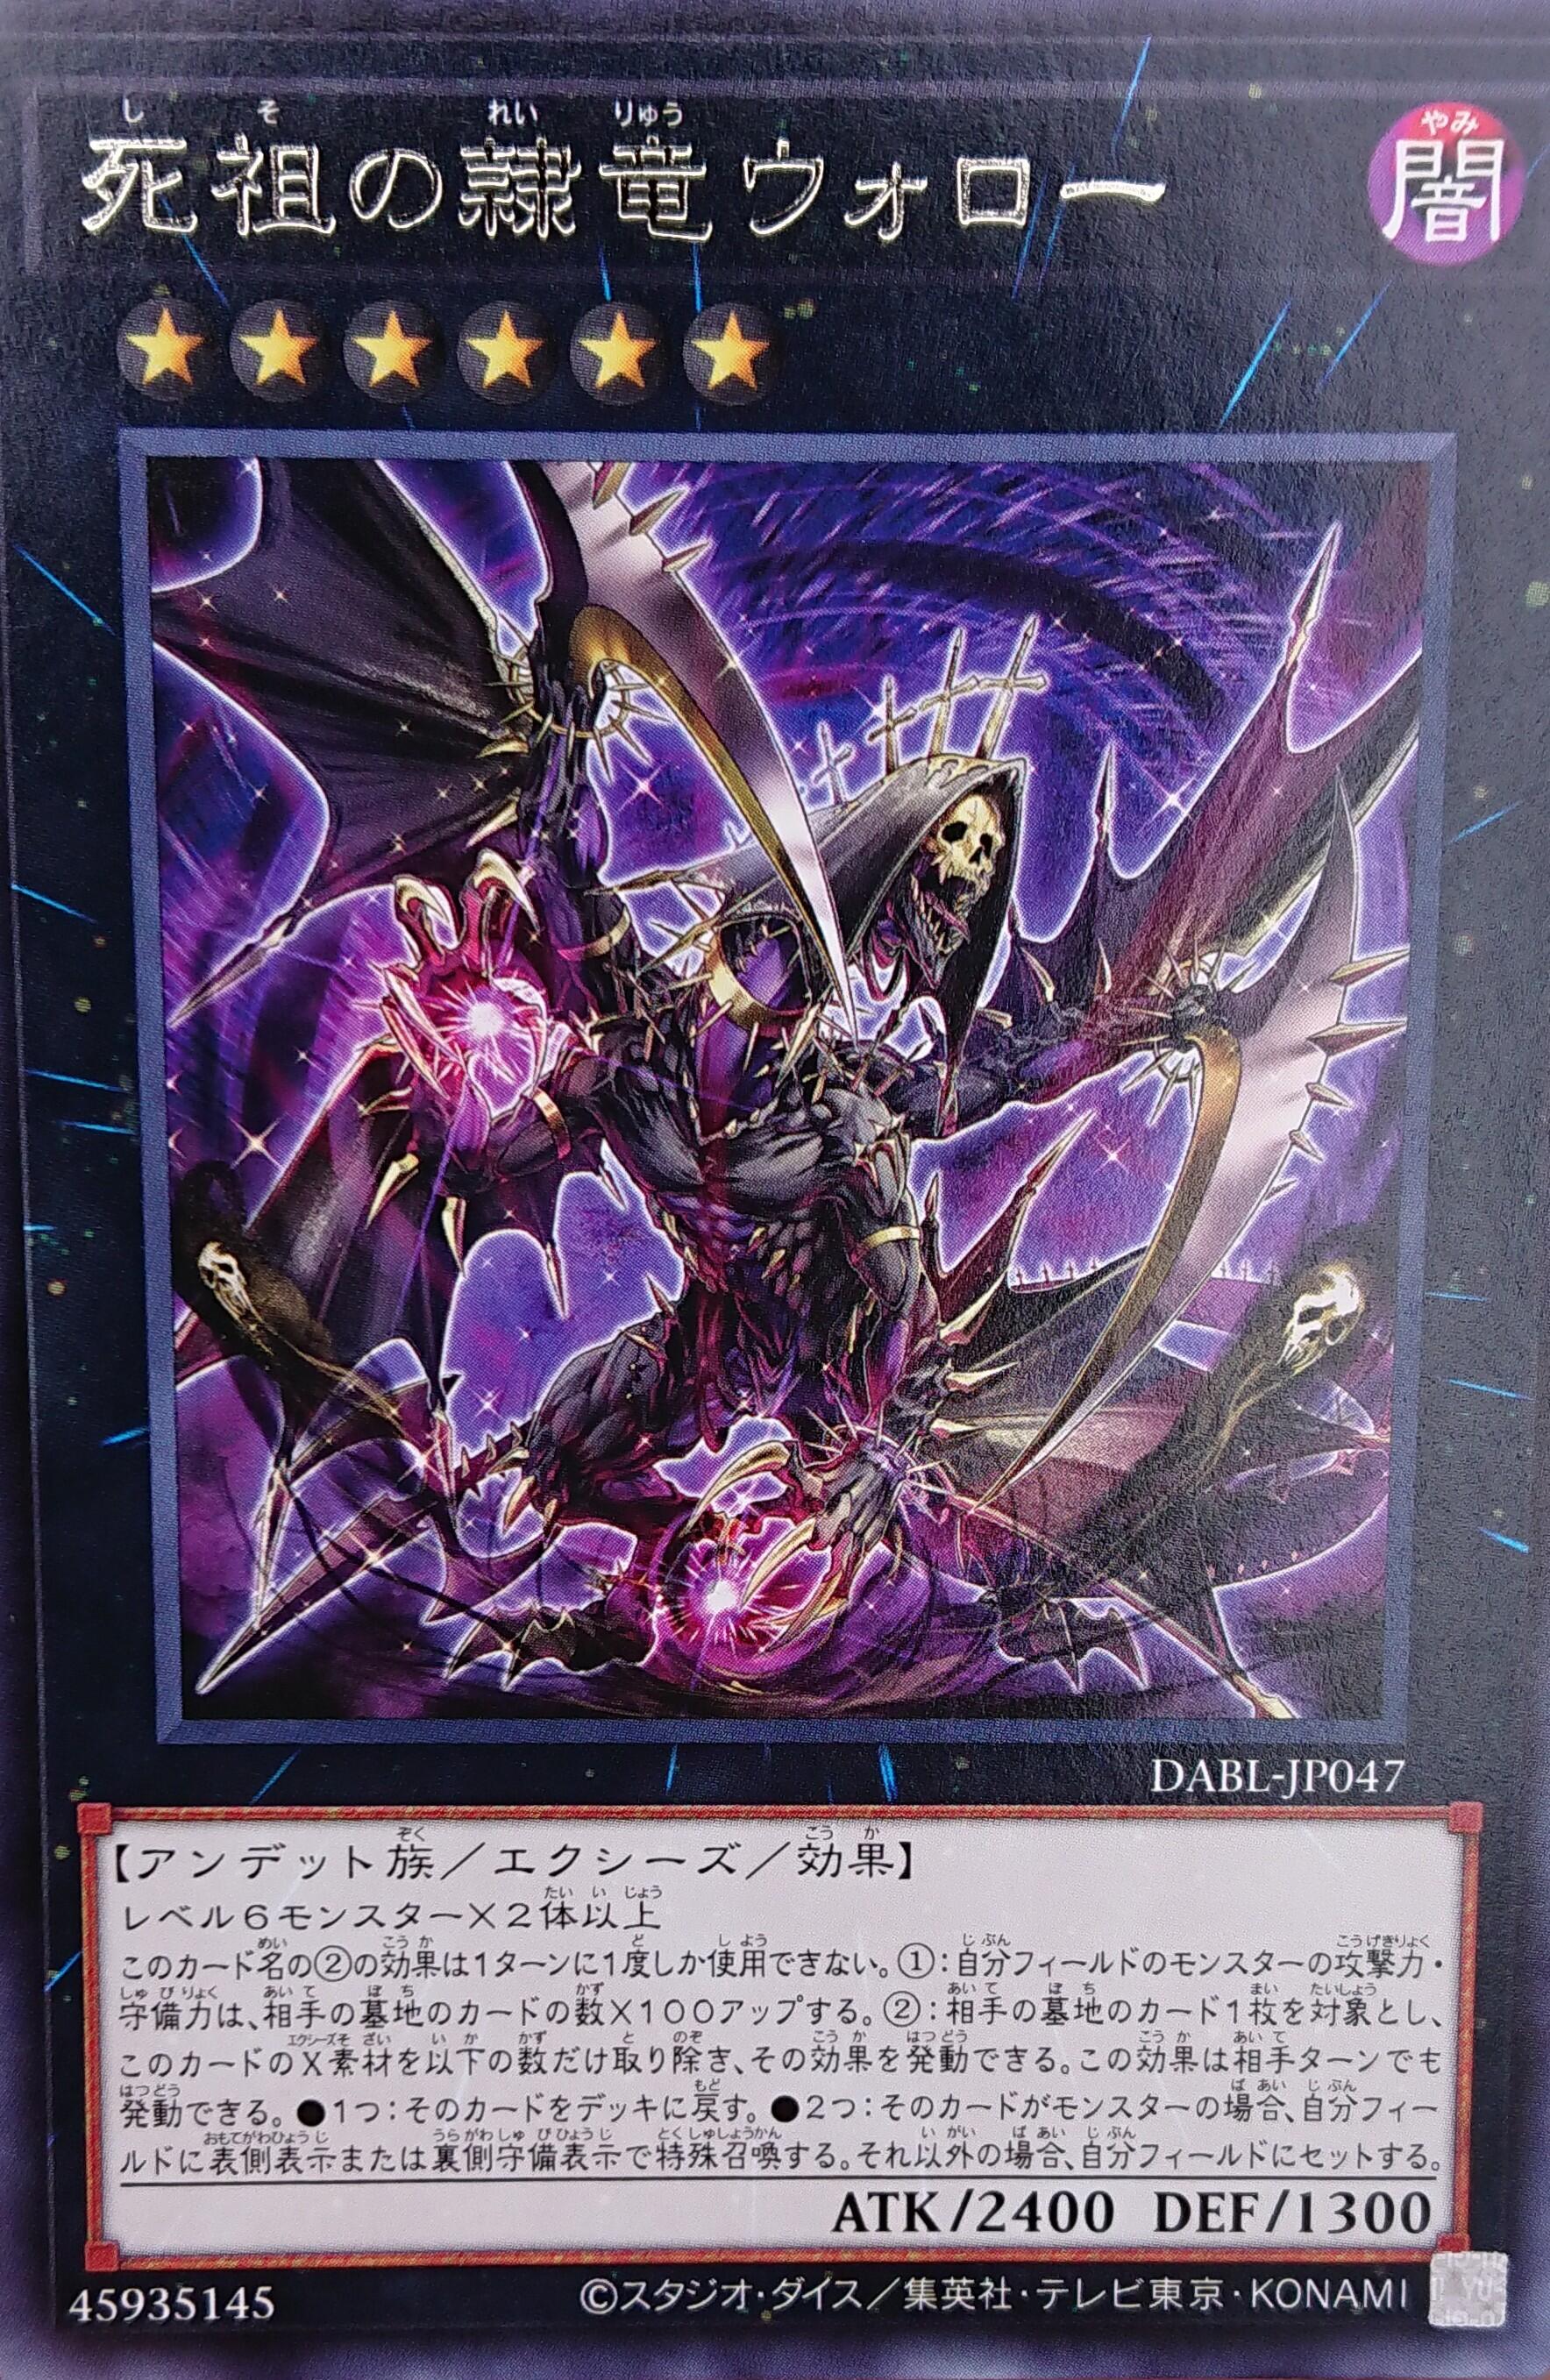 13 New Cards: Last of Darkwing Blast